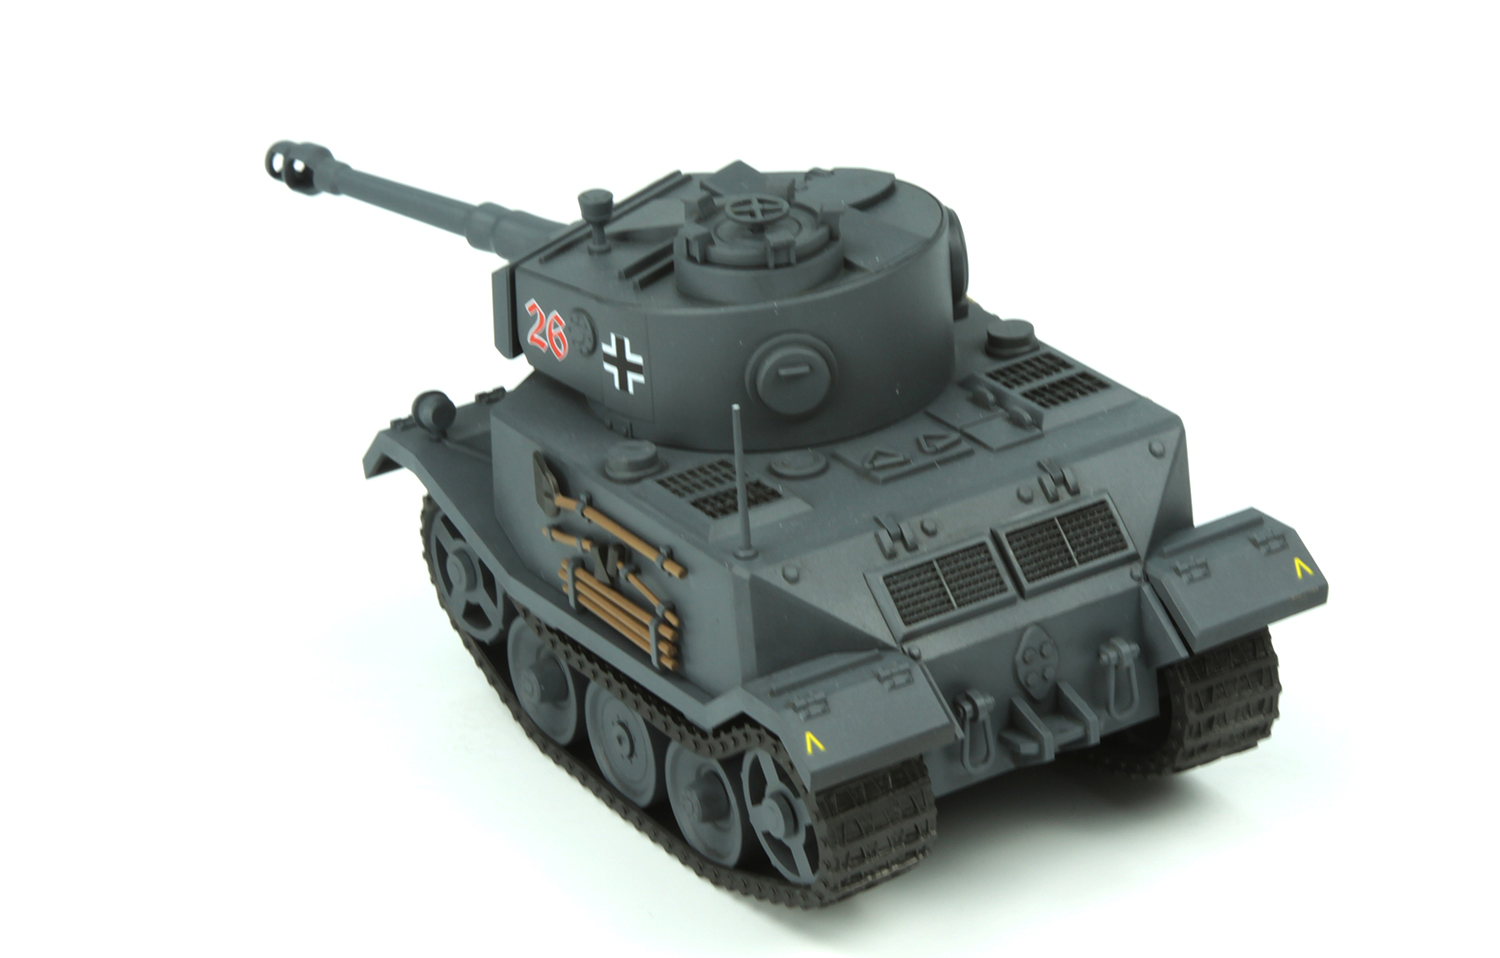 Germany Heavy Tank - Tiger (P) VK 45.01